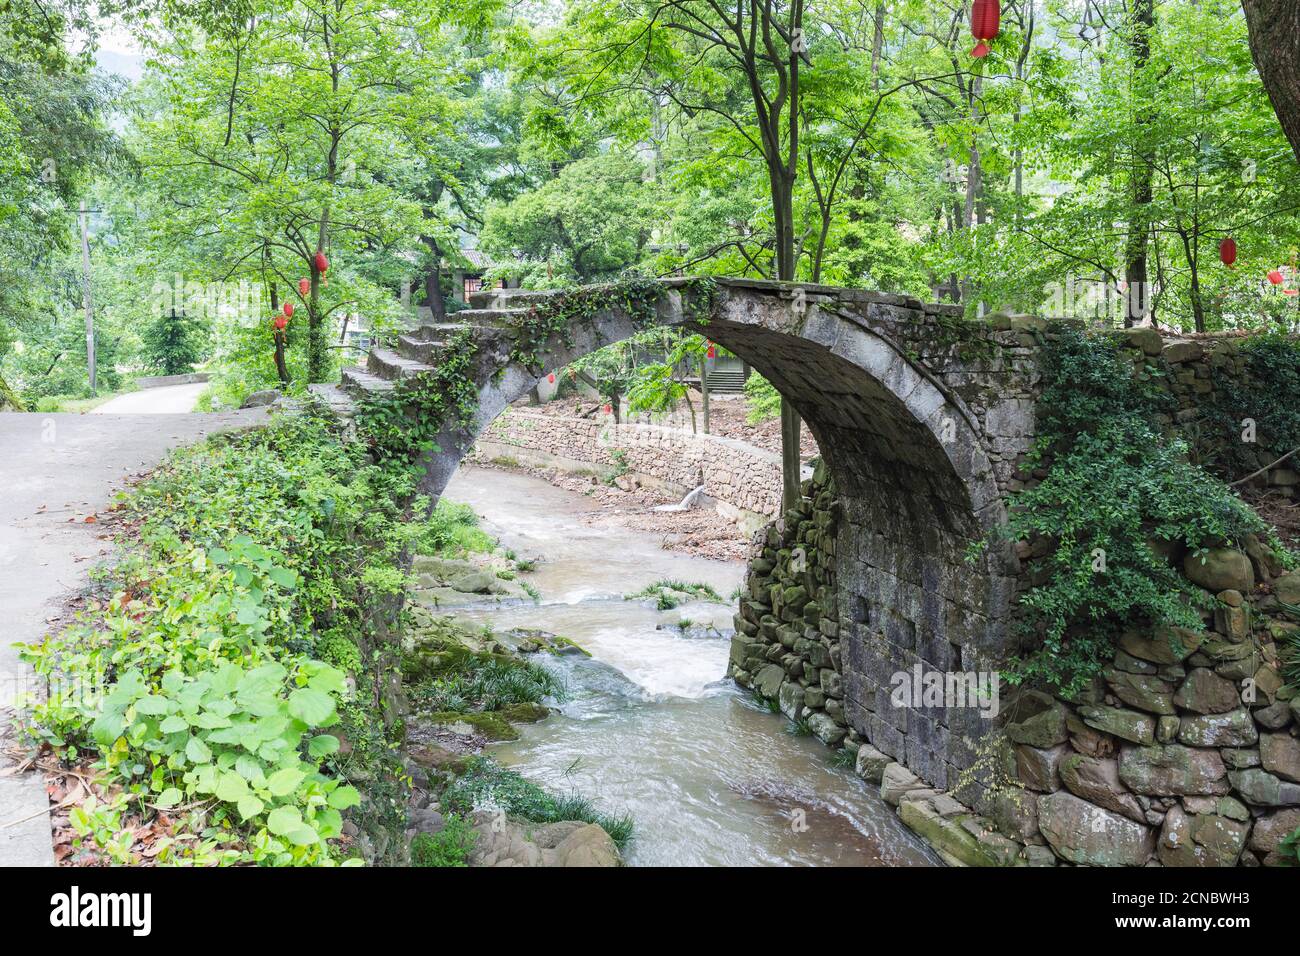 bellissimo ponte ad arco antico in pietra Foto Stock